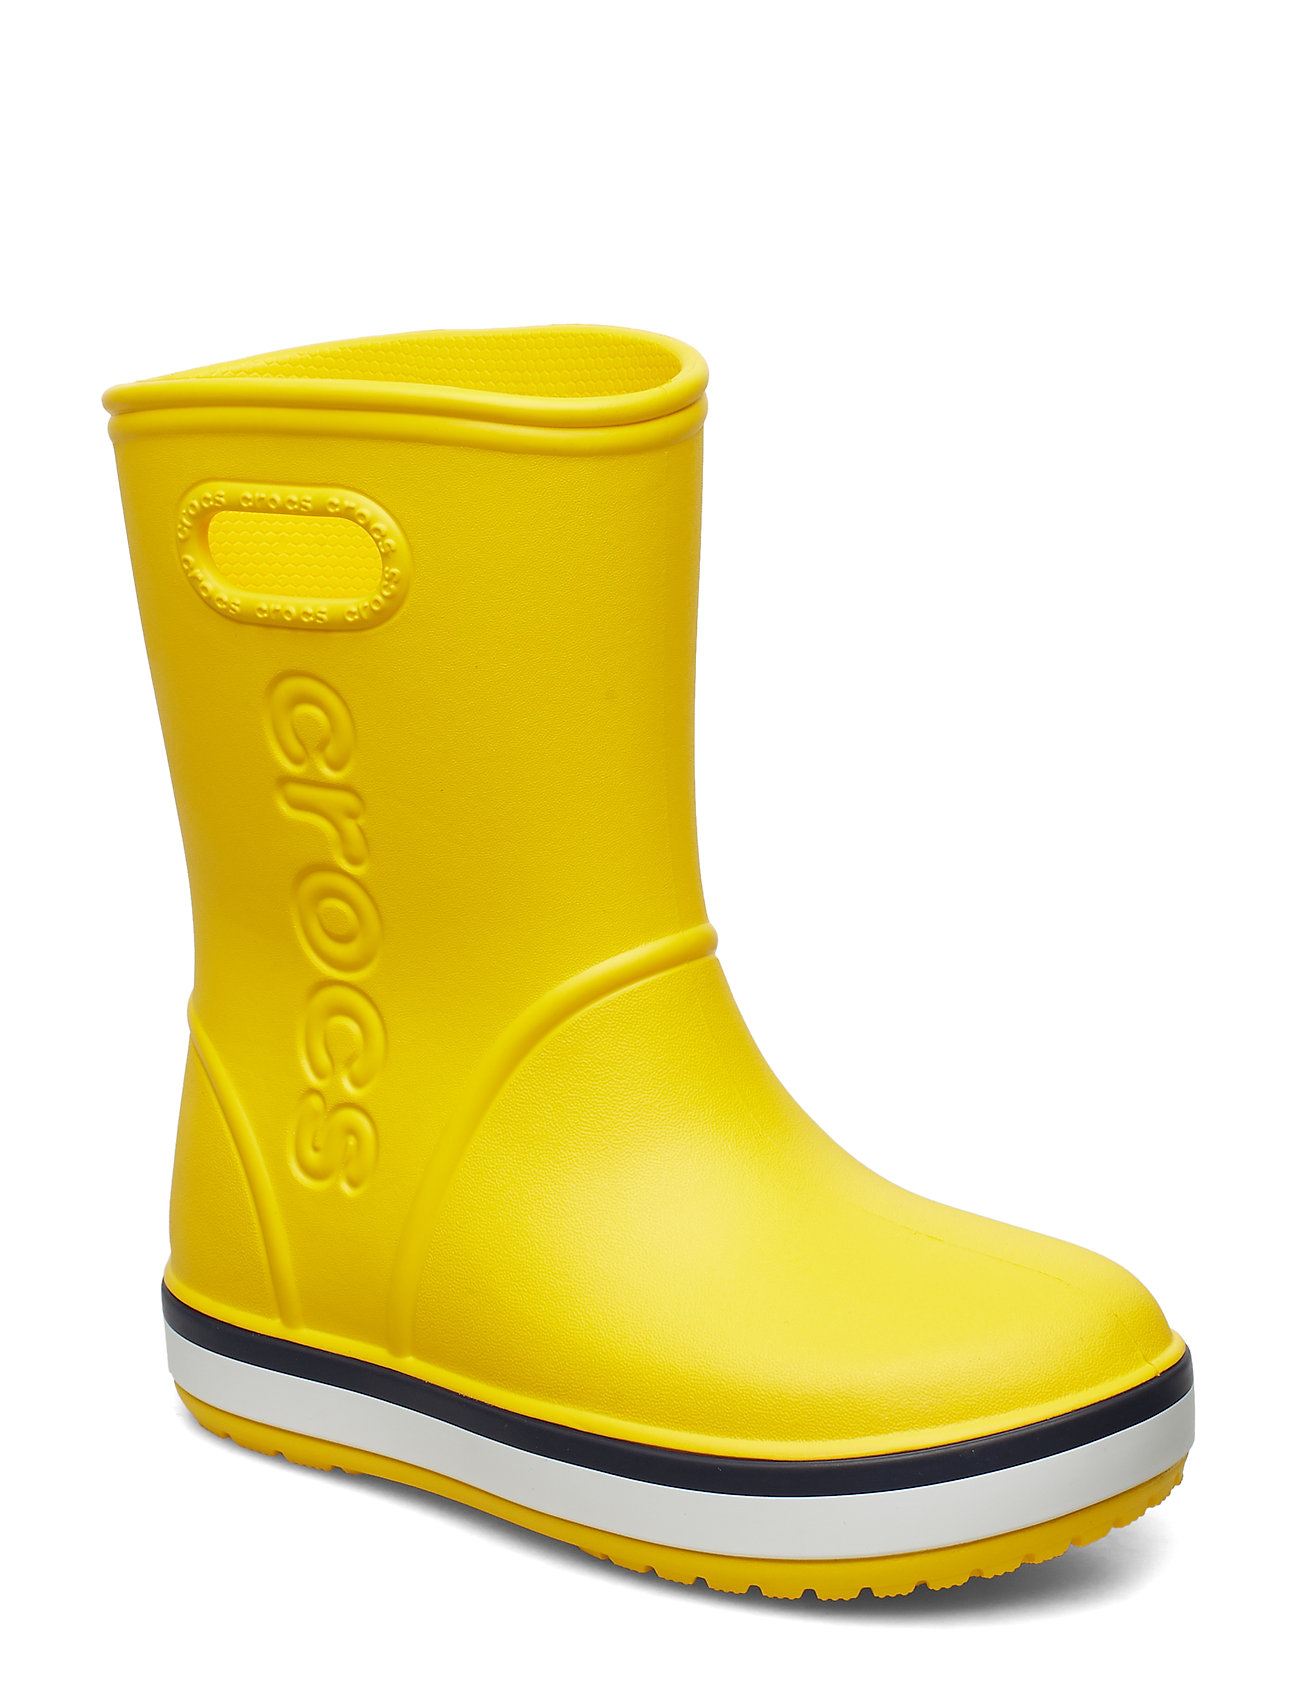 besked Ydmyg Kosciuszko Crocs gummistøvler – Crocband Rain Boot K Gummistøvler Gul Crocs til børn i  Blå - Pashion.dk